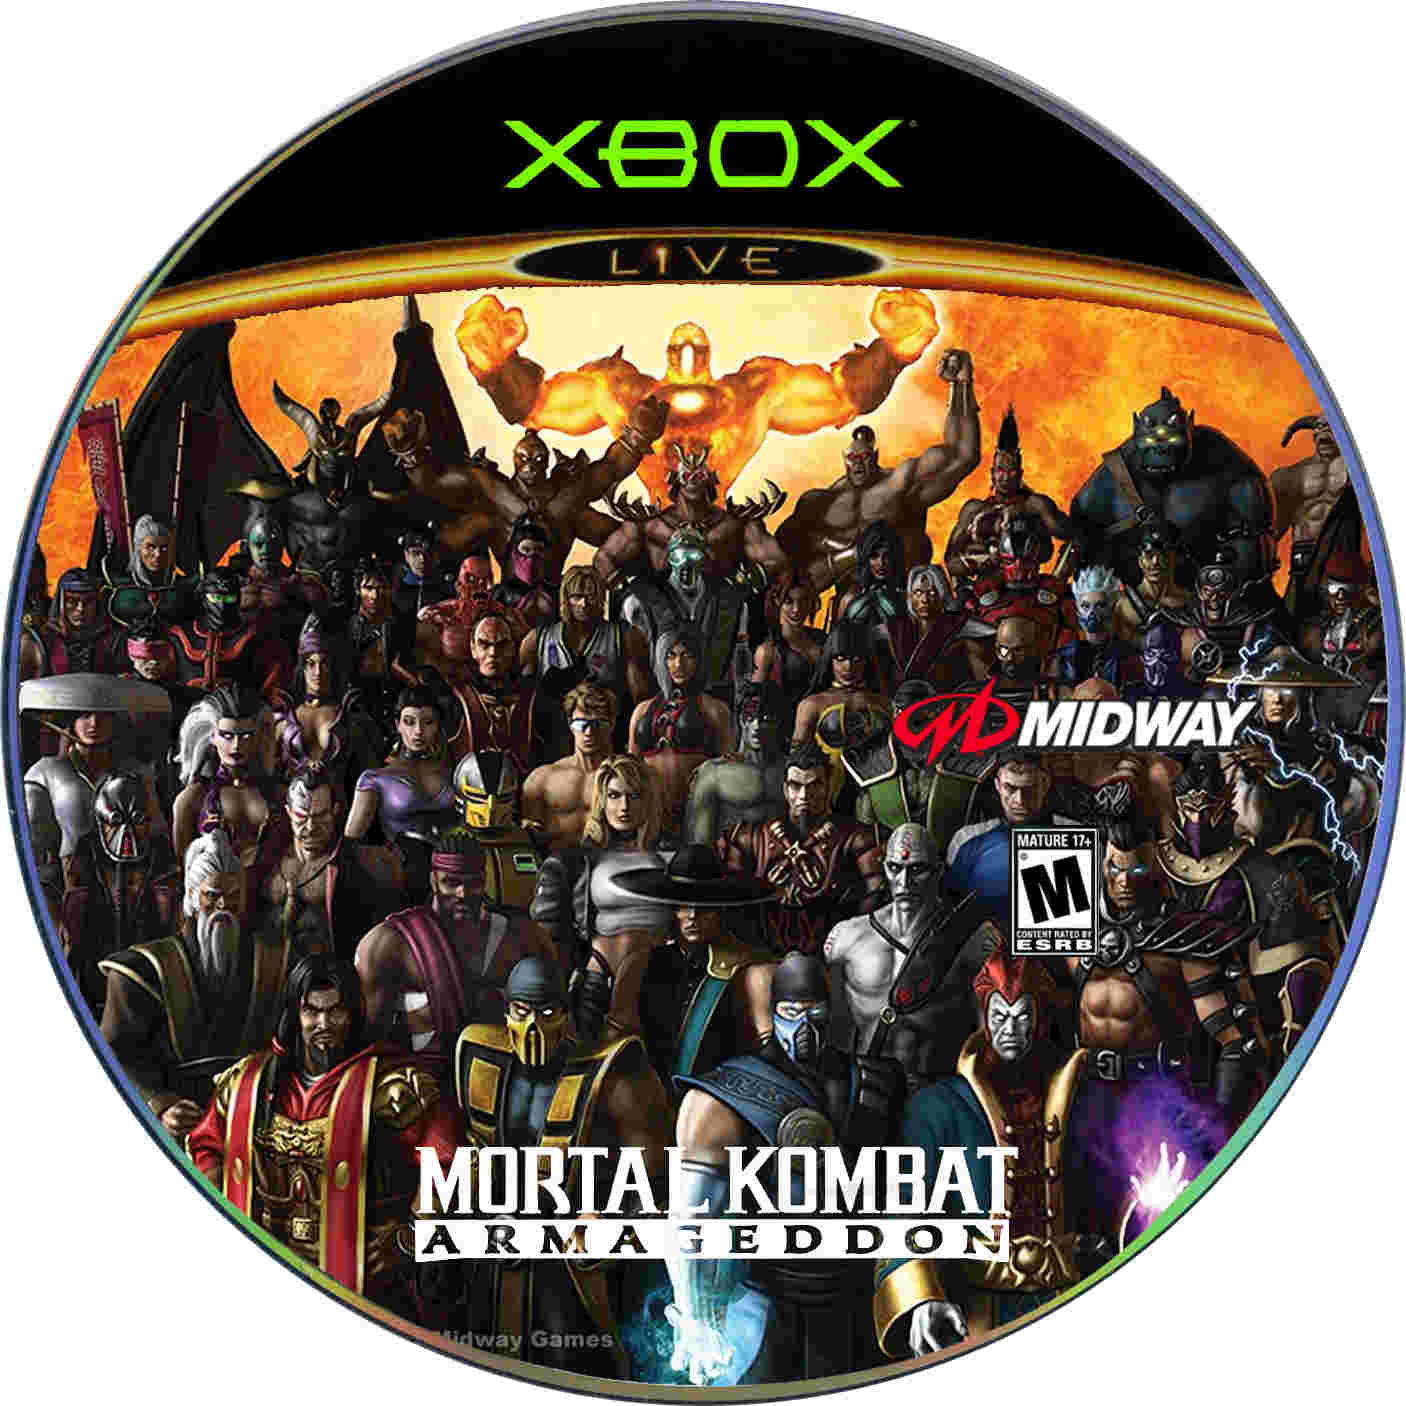 Мортал комбат музыка оригинал. Мортал комбат Армагеддон Xbox 360. Mortal Kombat Armageddon Xbox. Мортал комбат песни. Песня мортал комбат.